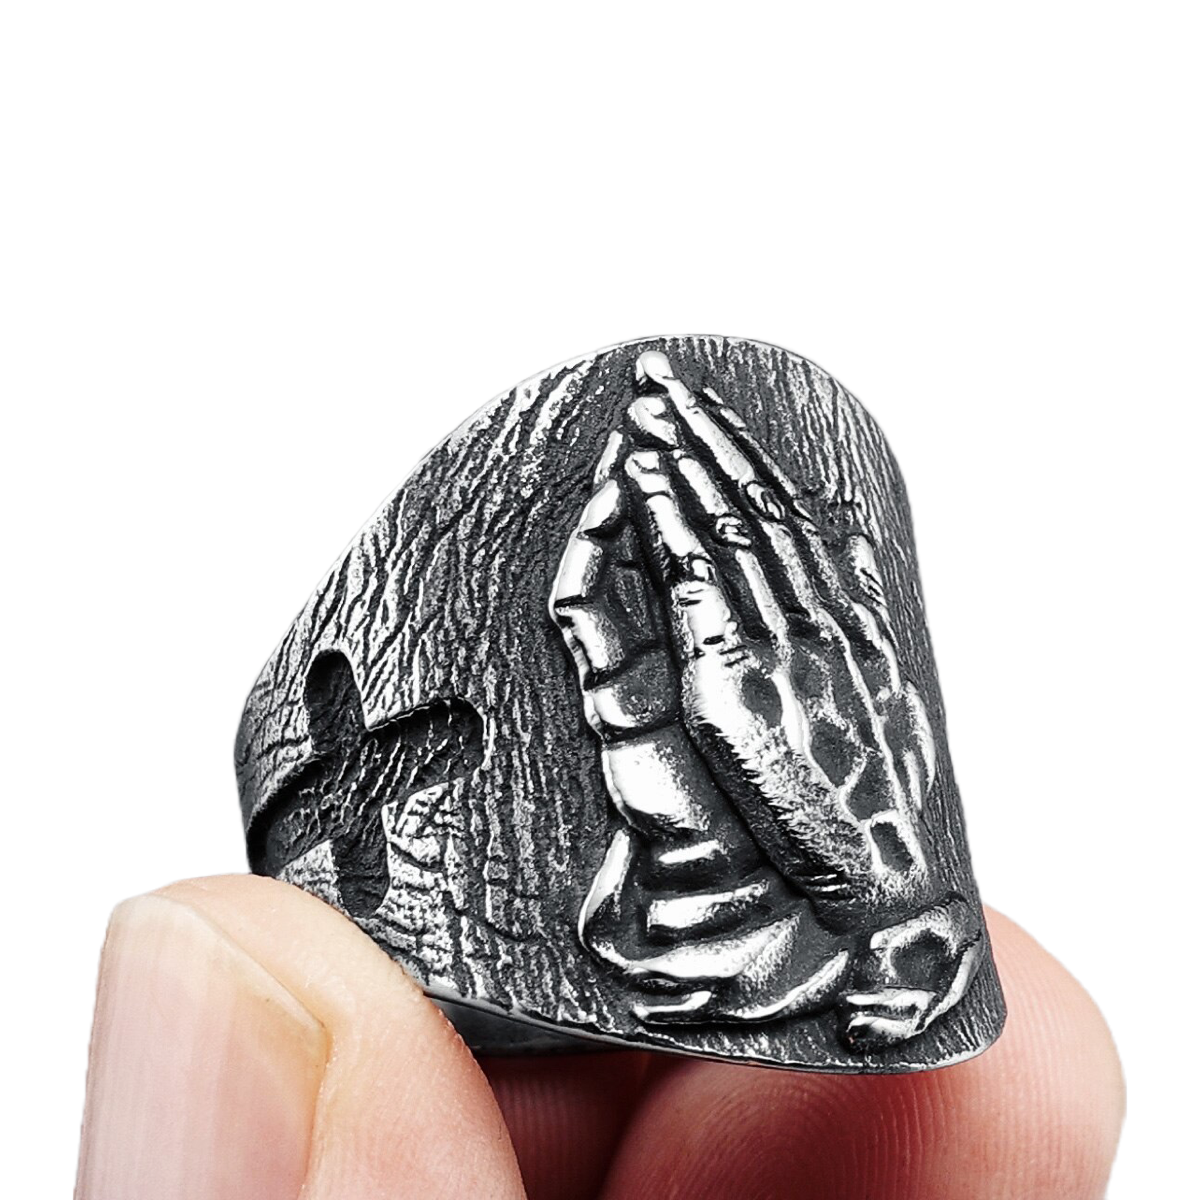 Carved Pray Ring